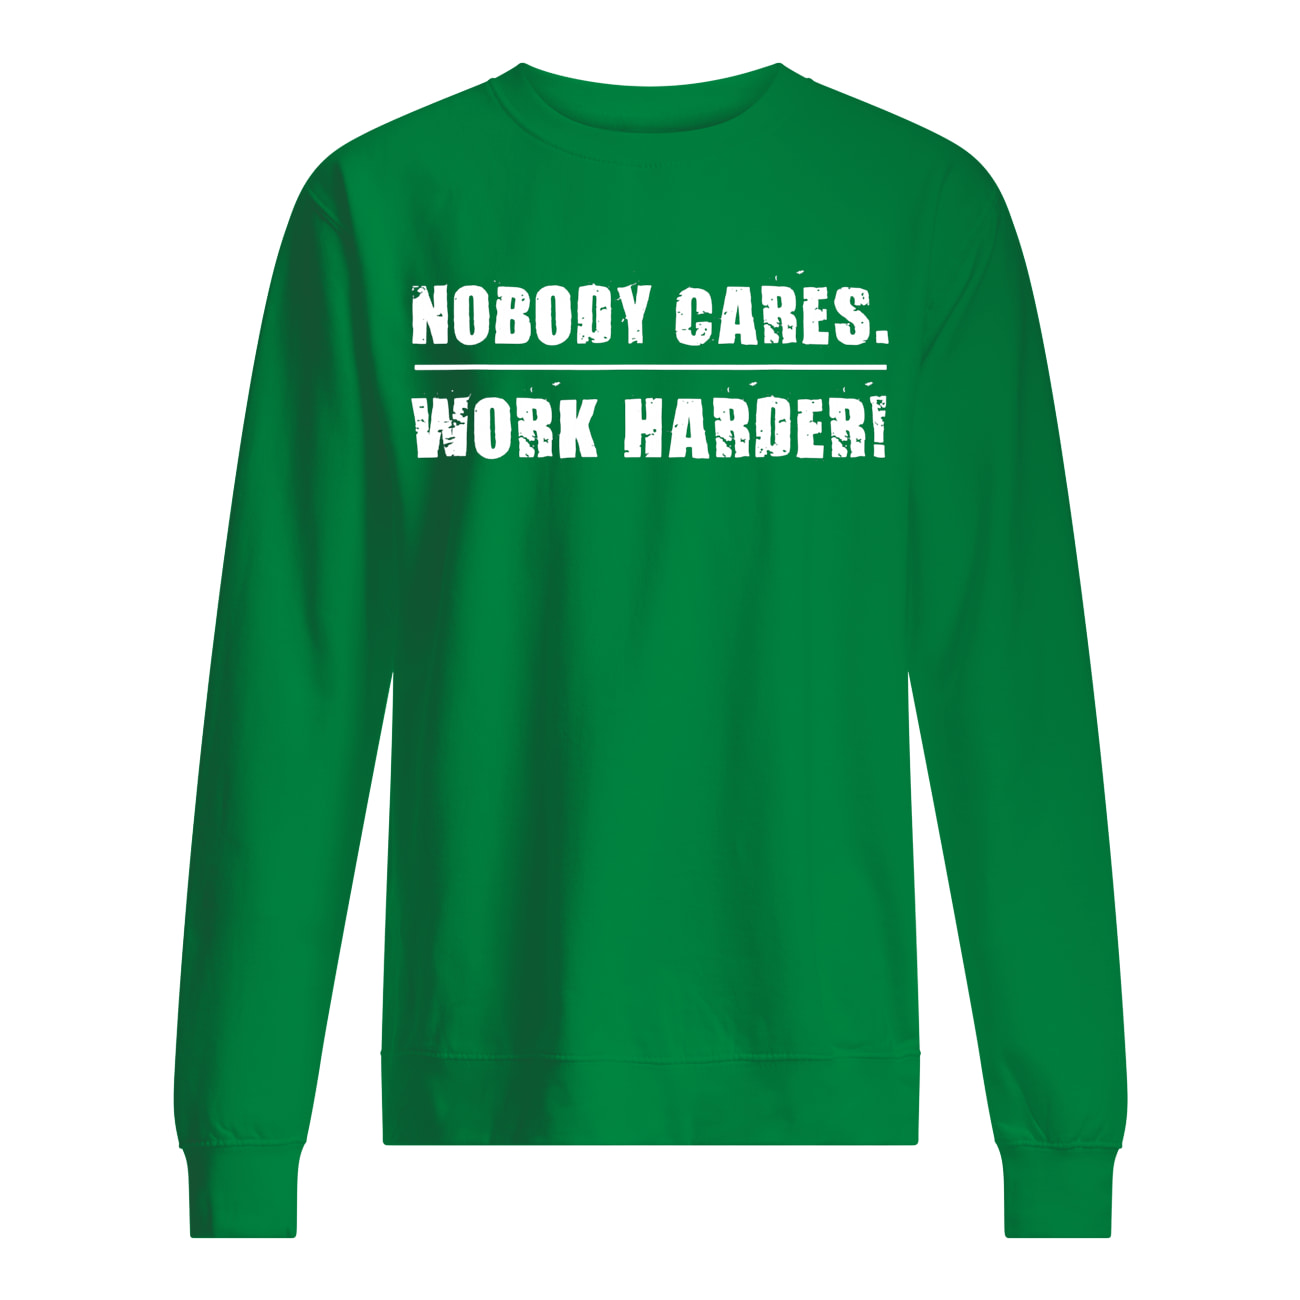 Nobody cares work harder motivational fitness workout gym sweatshirt